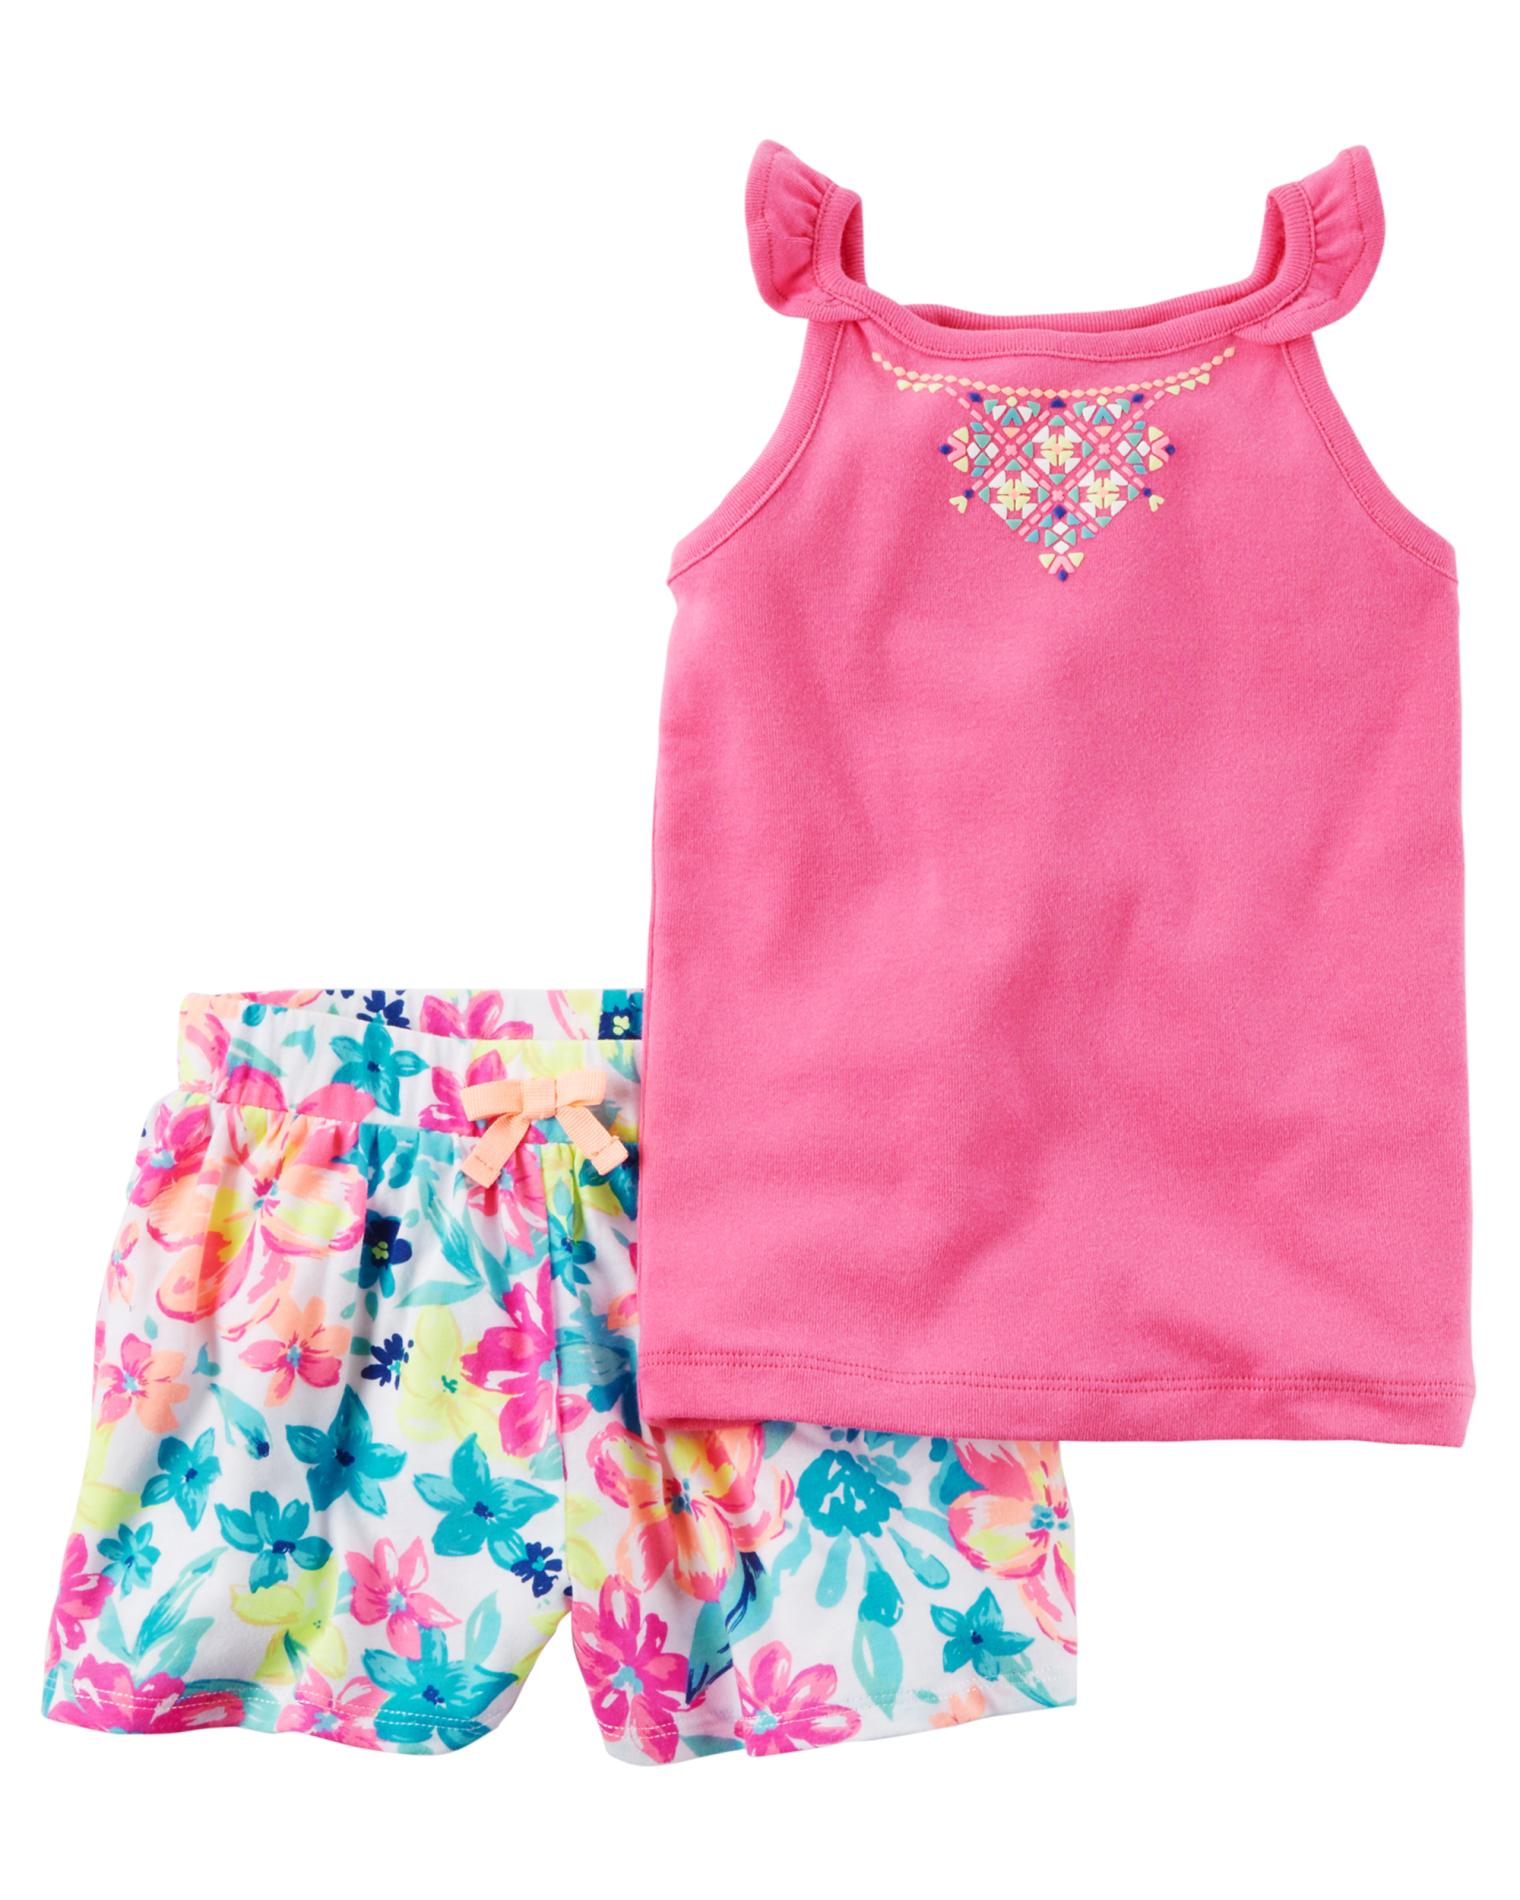 Carter's Toddler Girls' Flutter Tank Top & Shorts - Floral